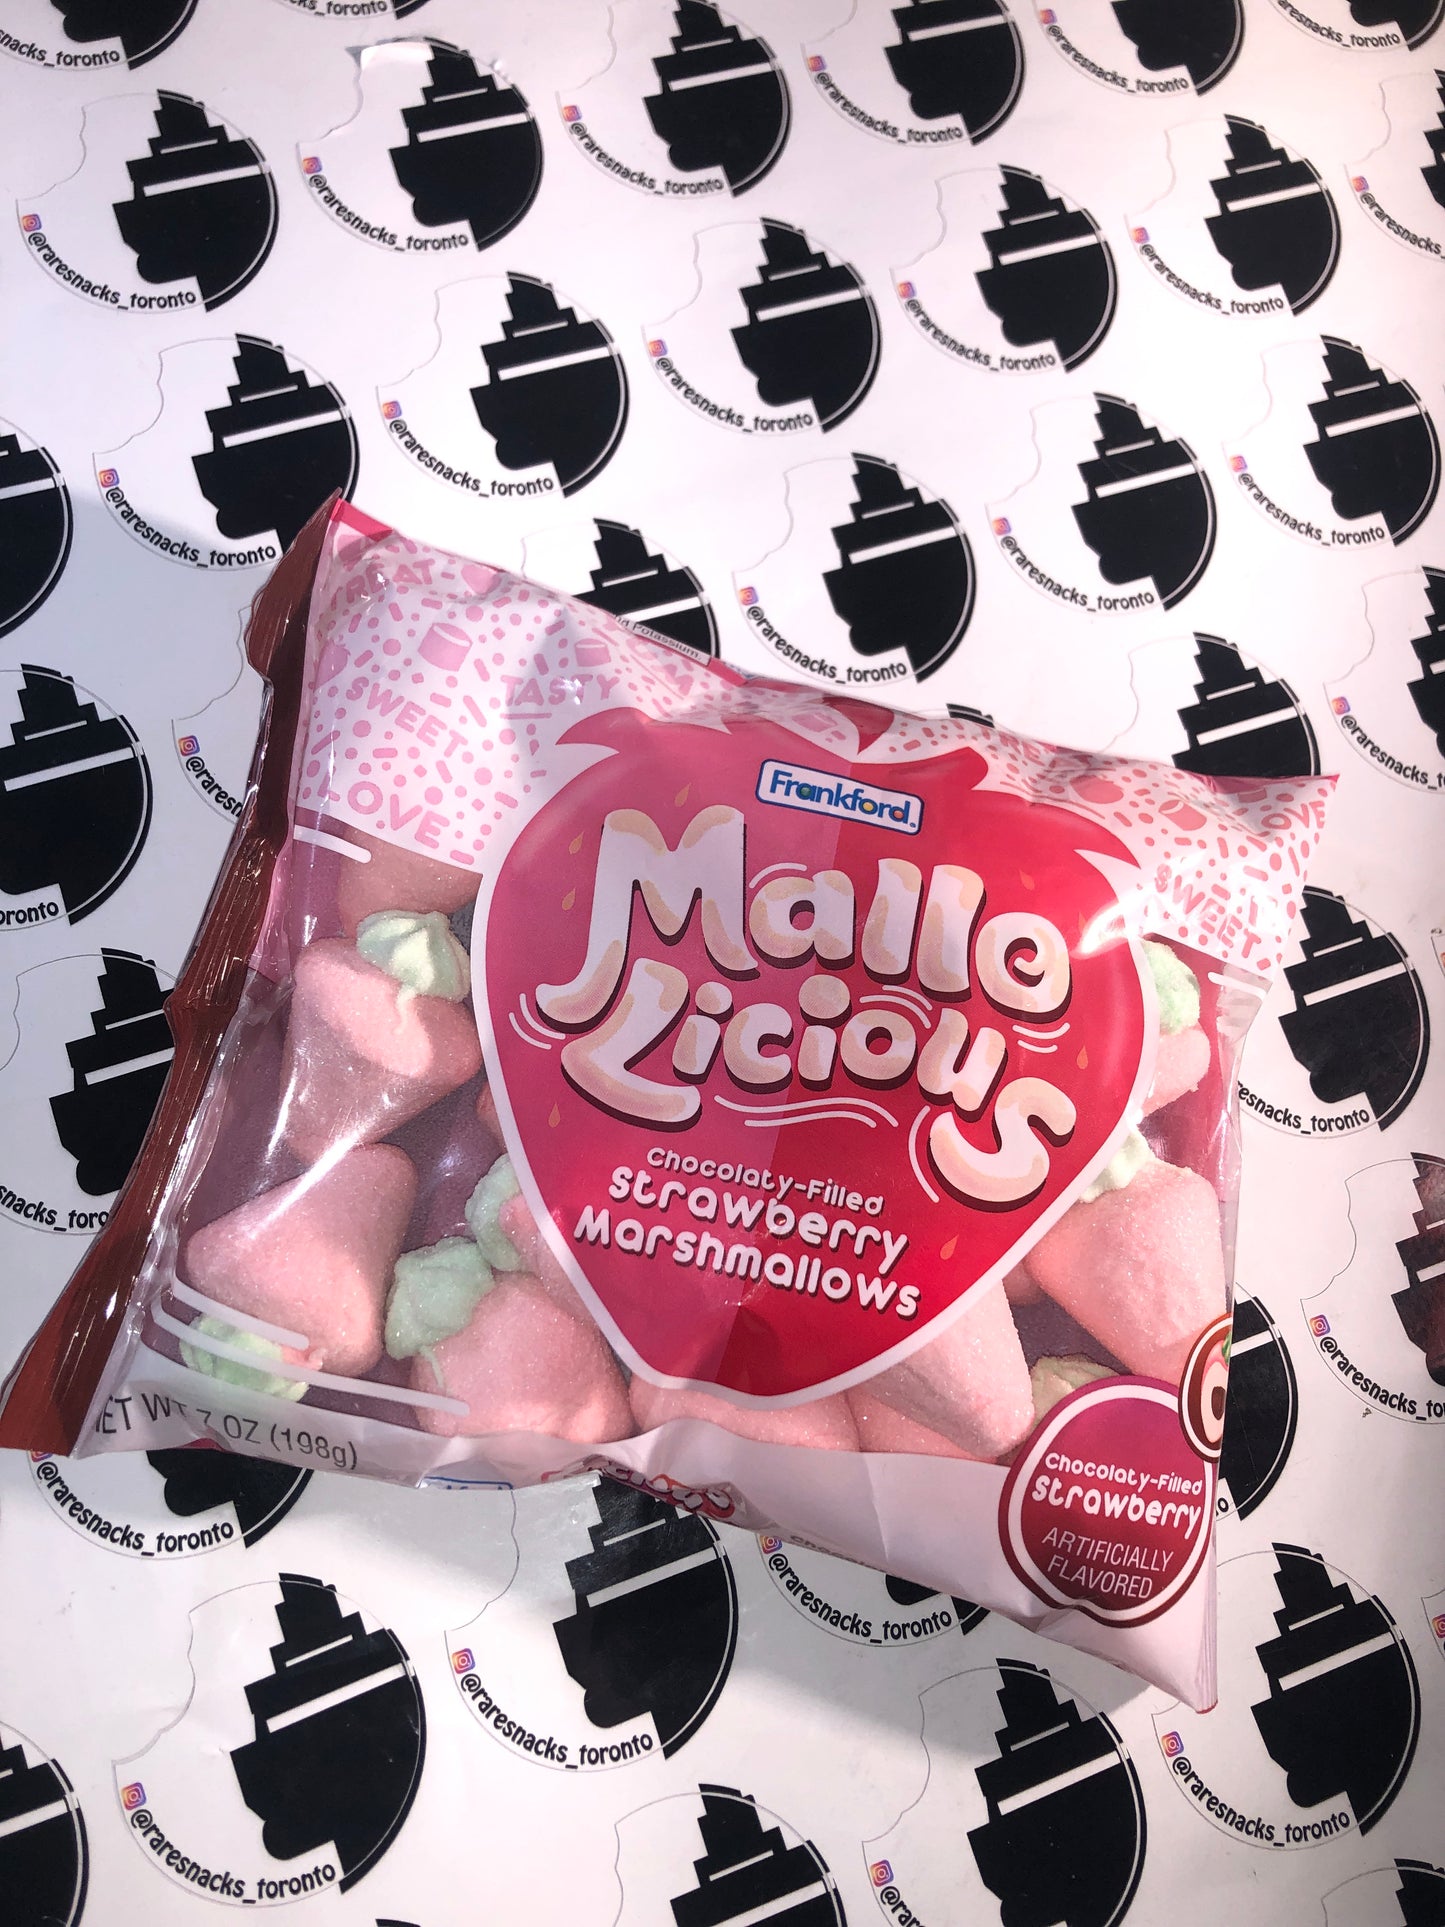 Mallolicious chocolately filled strawberry marshmallows